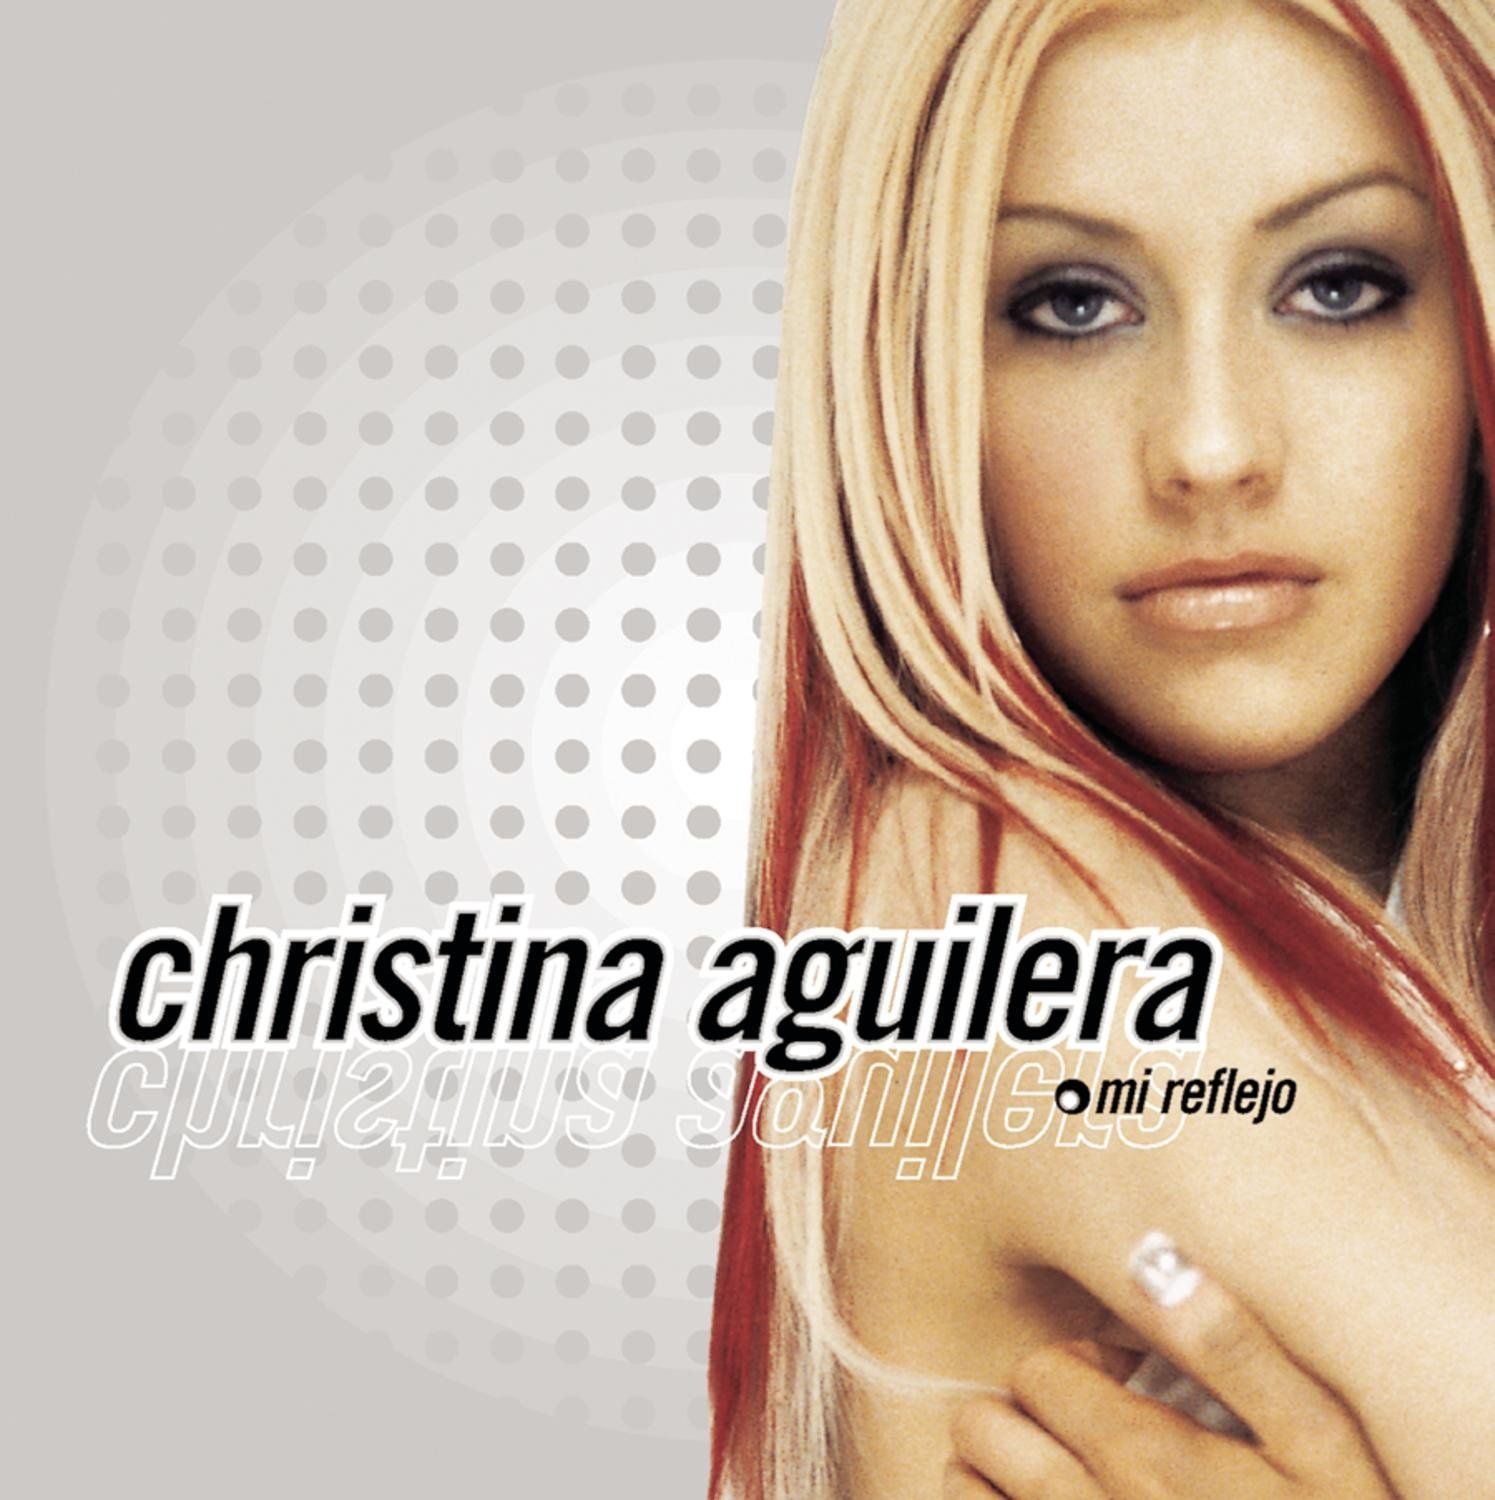 christina aguilera i am sorry for blaming you mp3 download